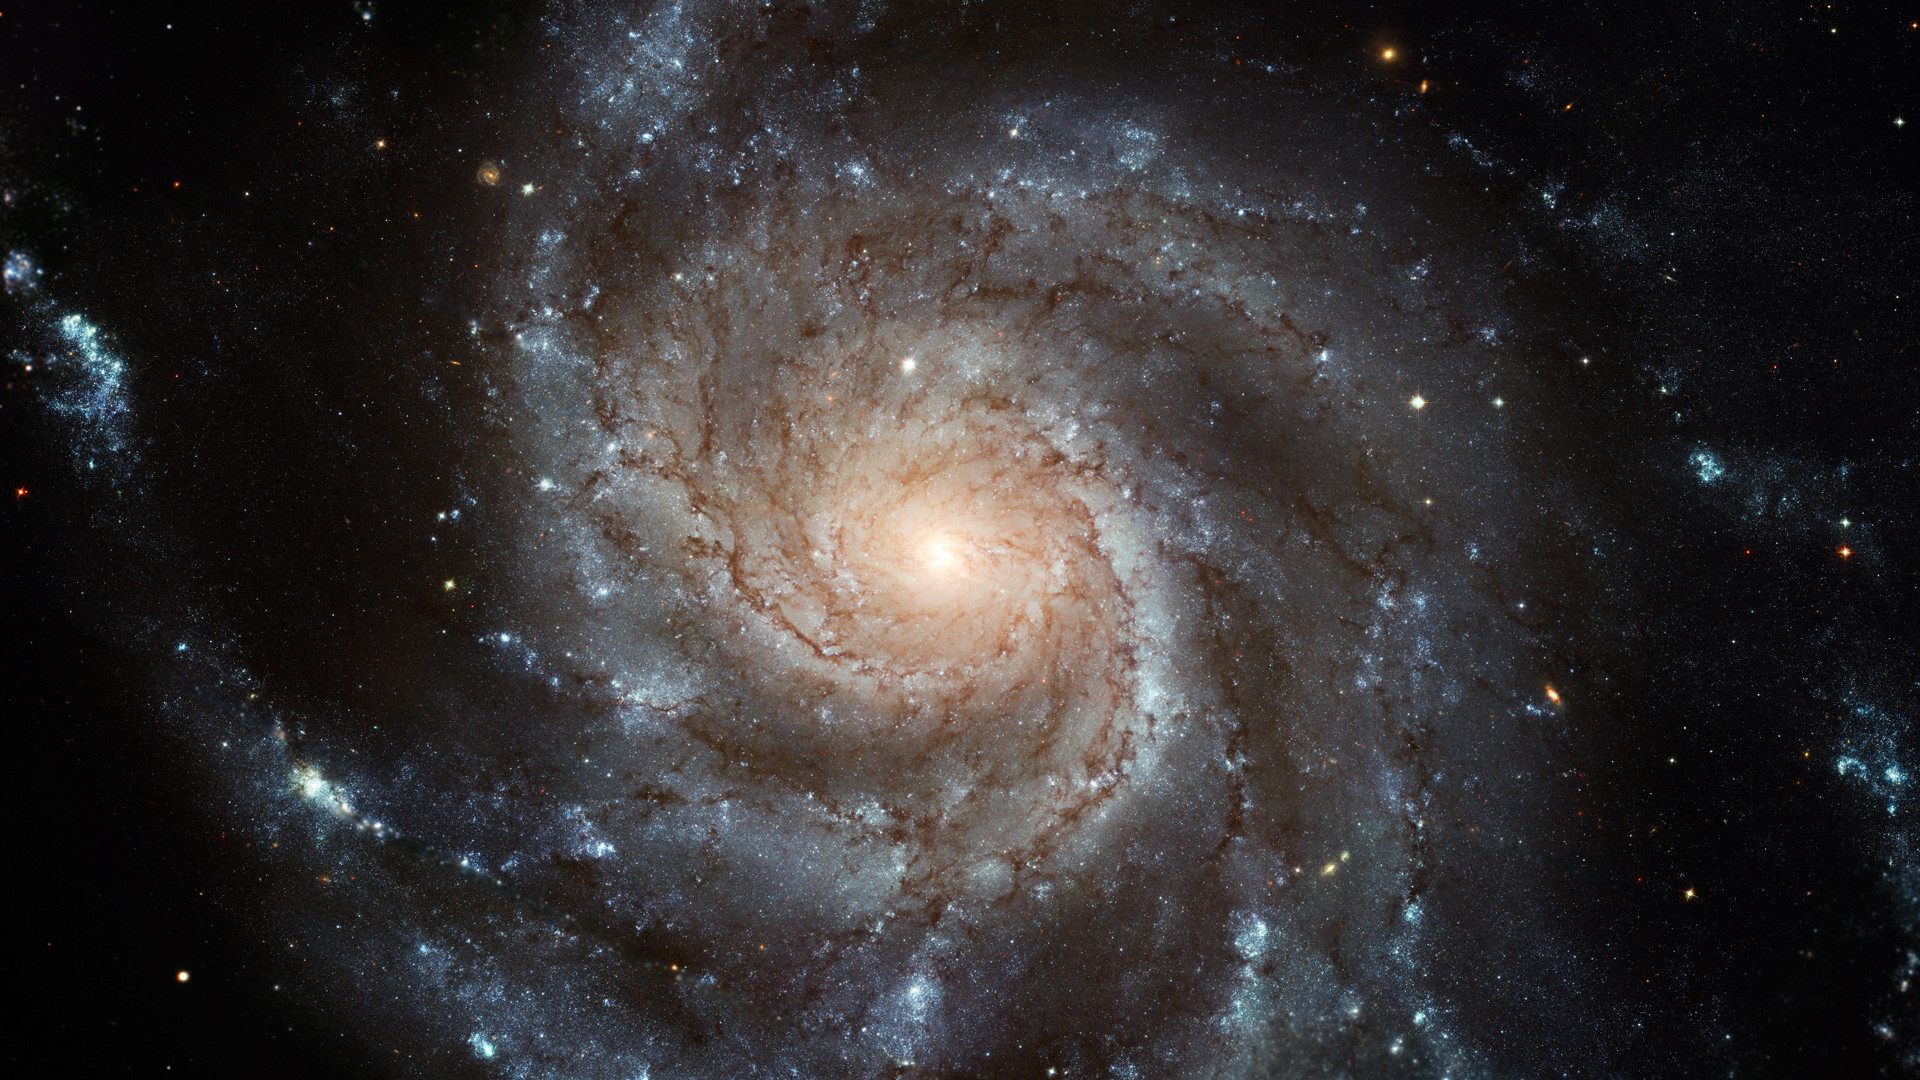 Galaxia espiral